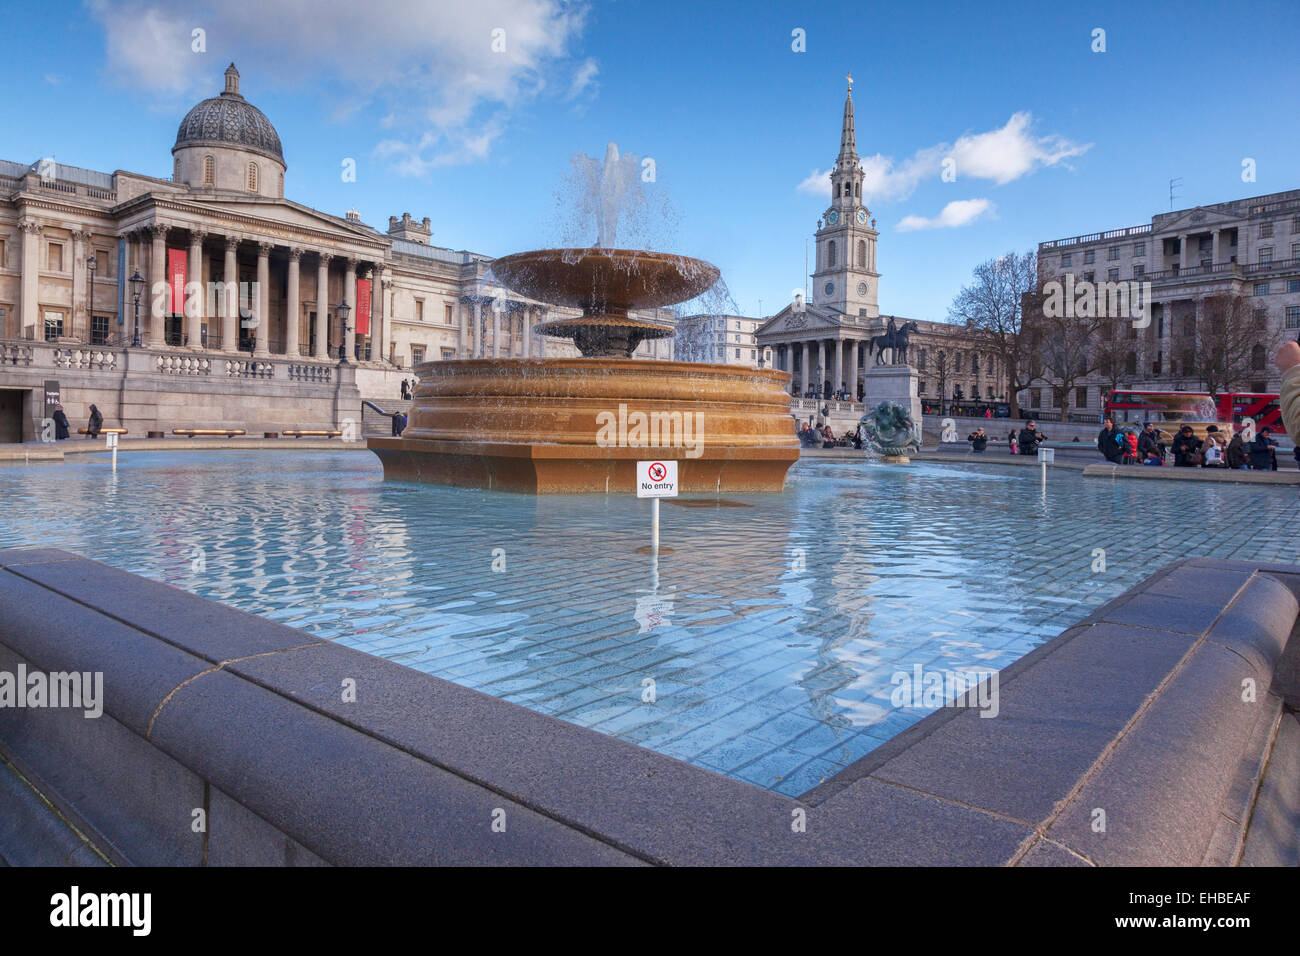 Trafalgar Square, London, No Entry sign in fountain. Stock Photo